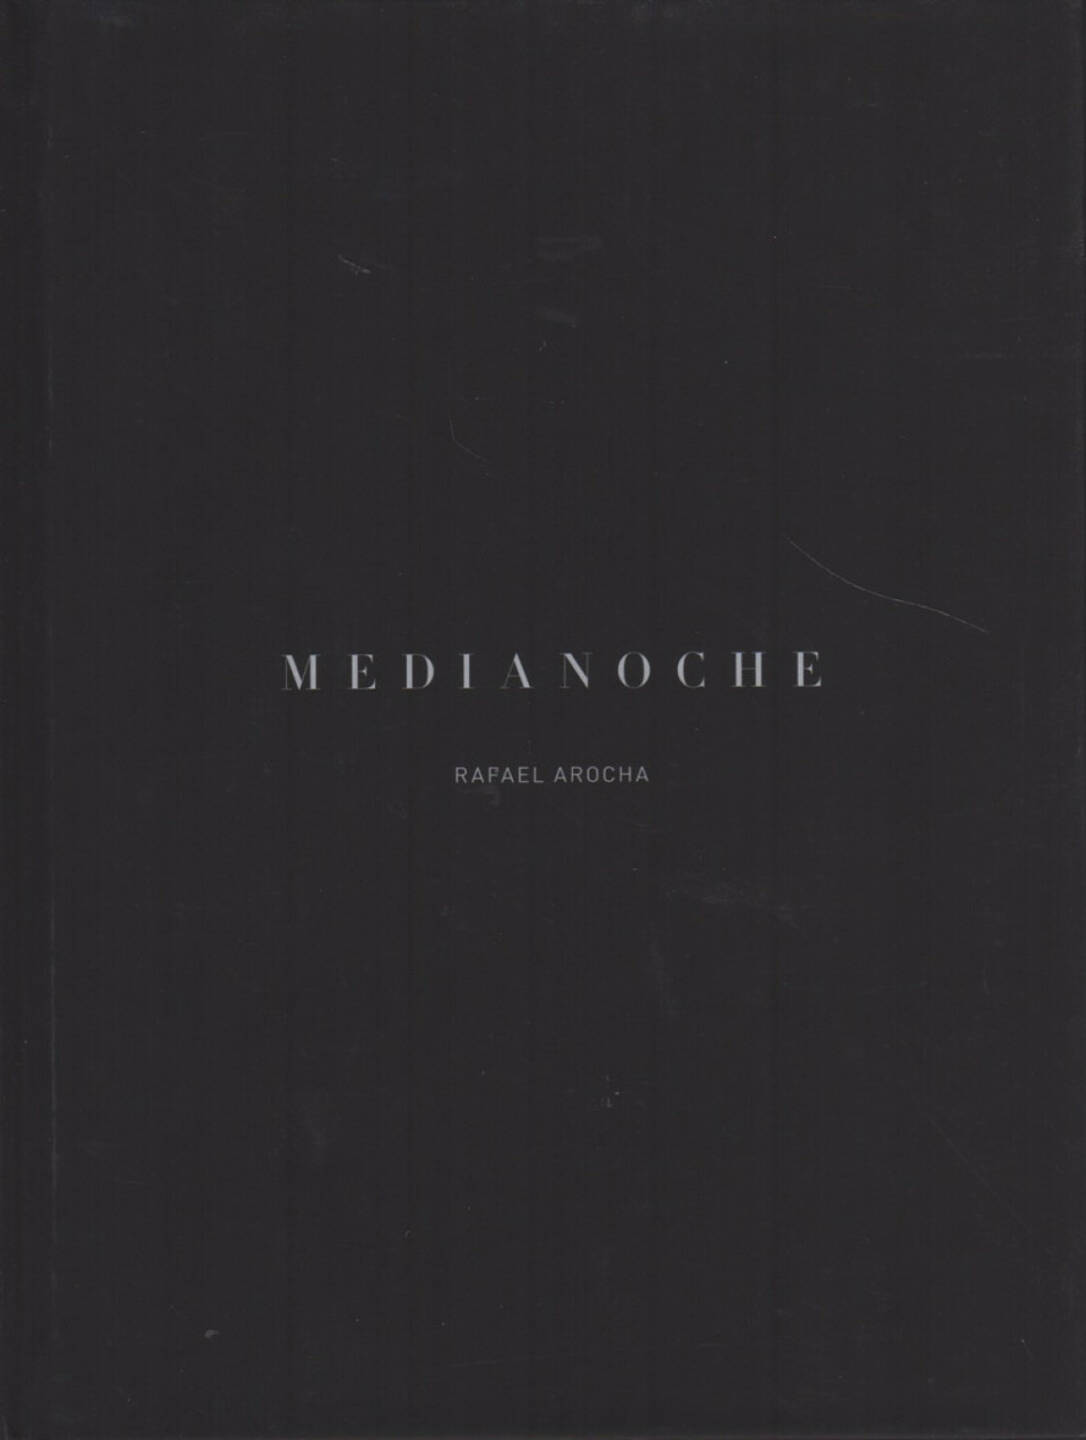 Rafael Arocha - Medianoche, Self Published, Cover - http://josefchladek.com/book/rafael_arocha_-_medianoche